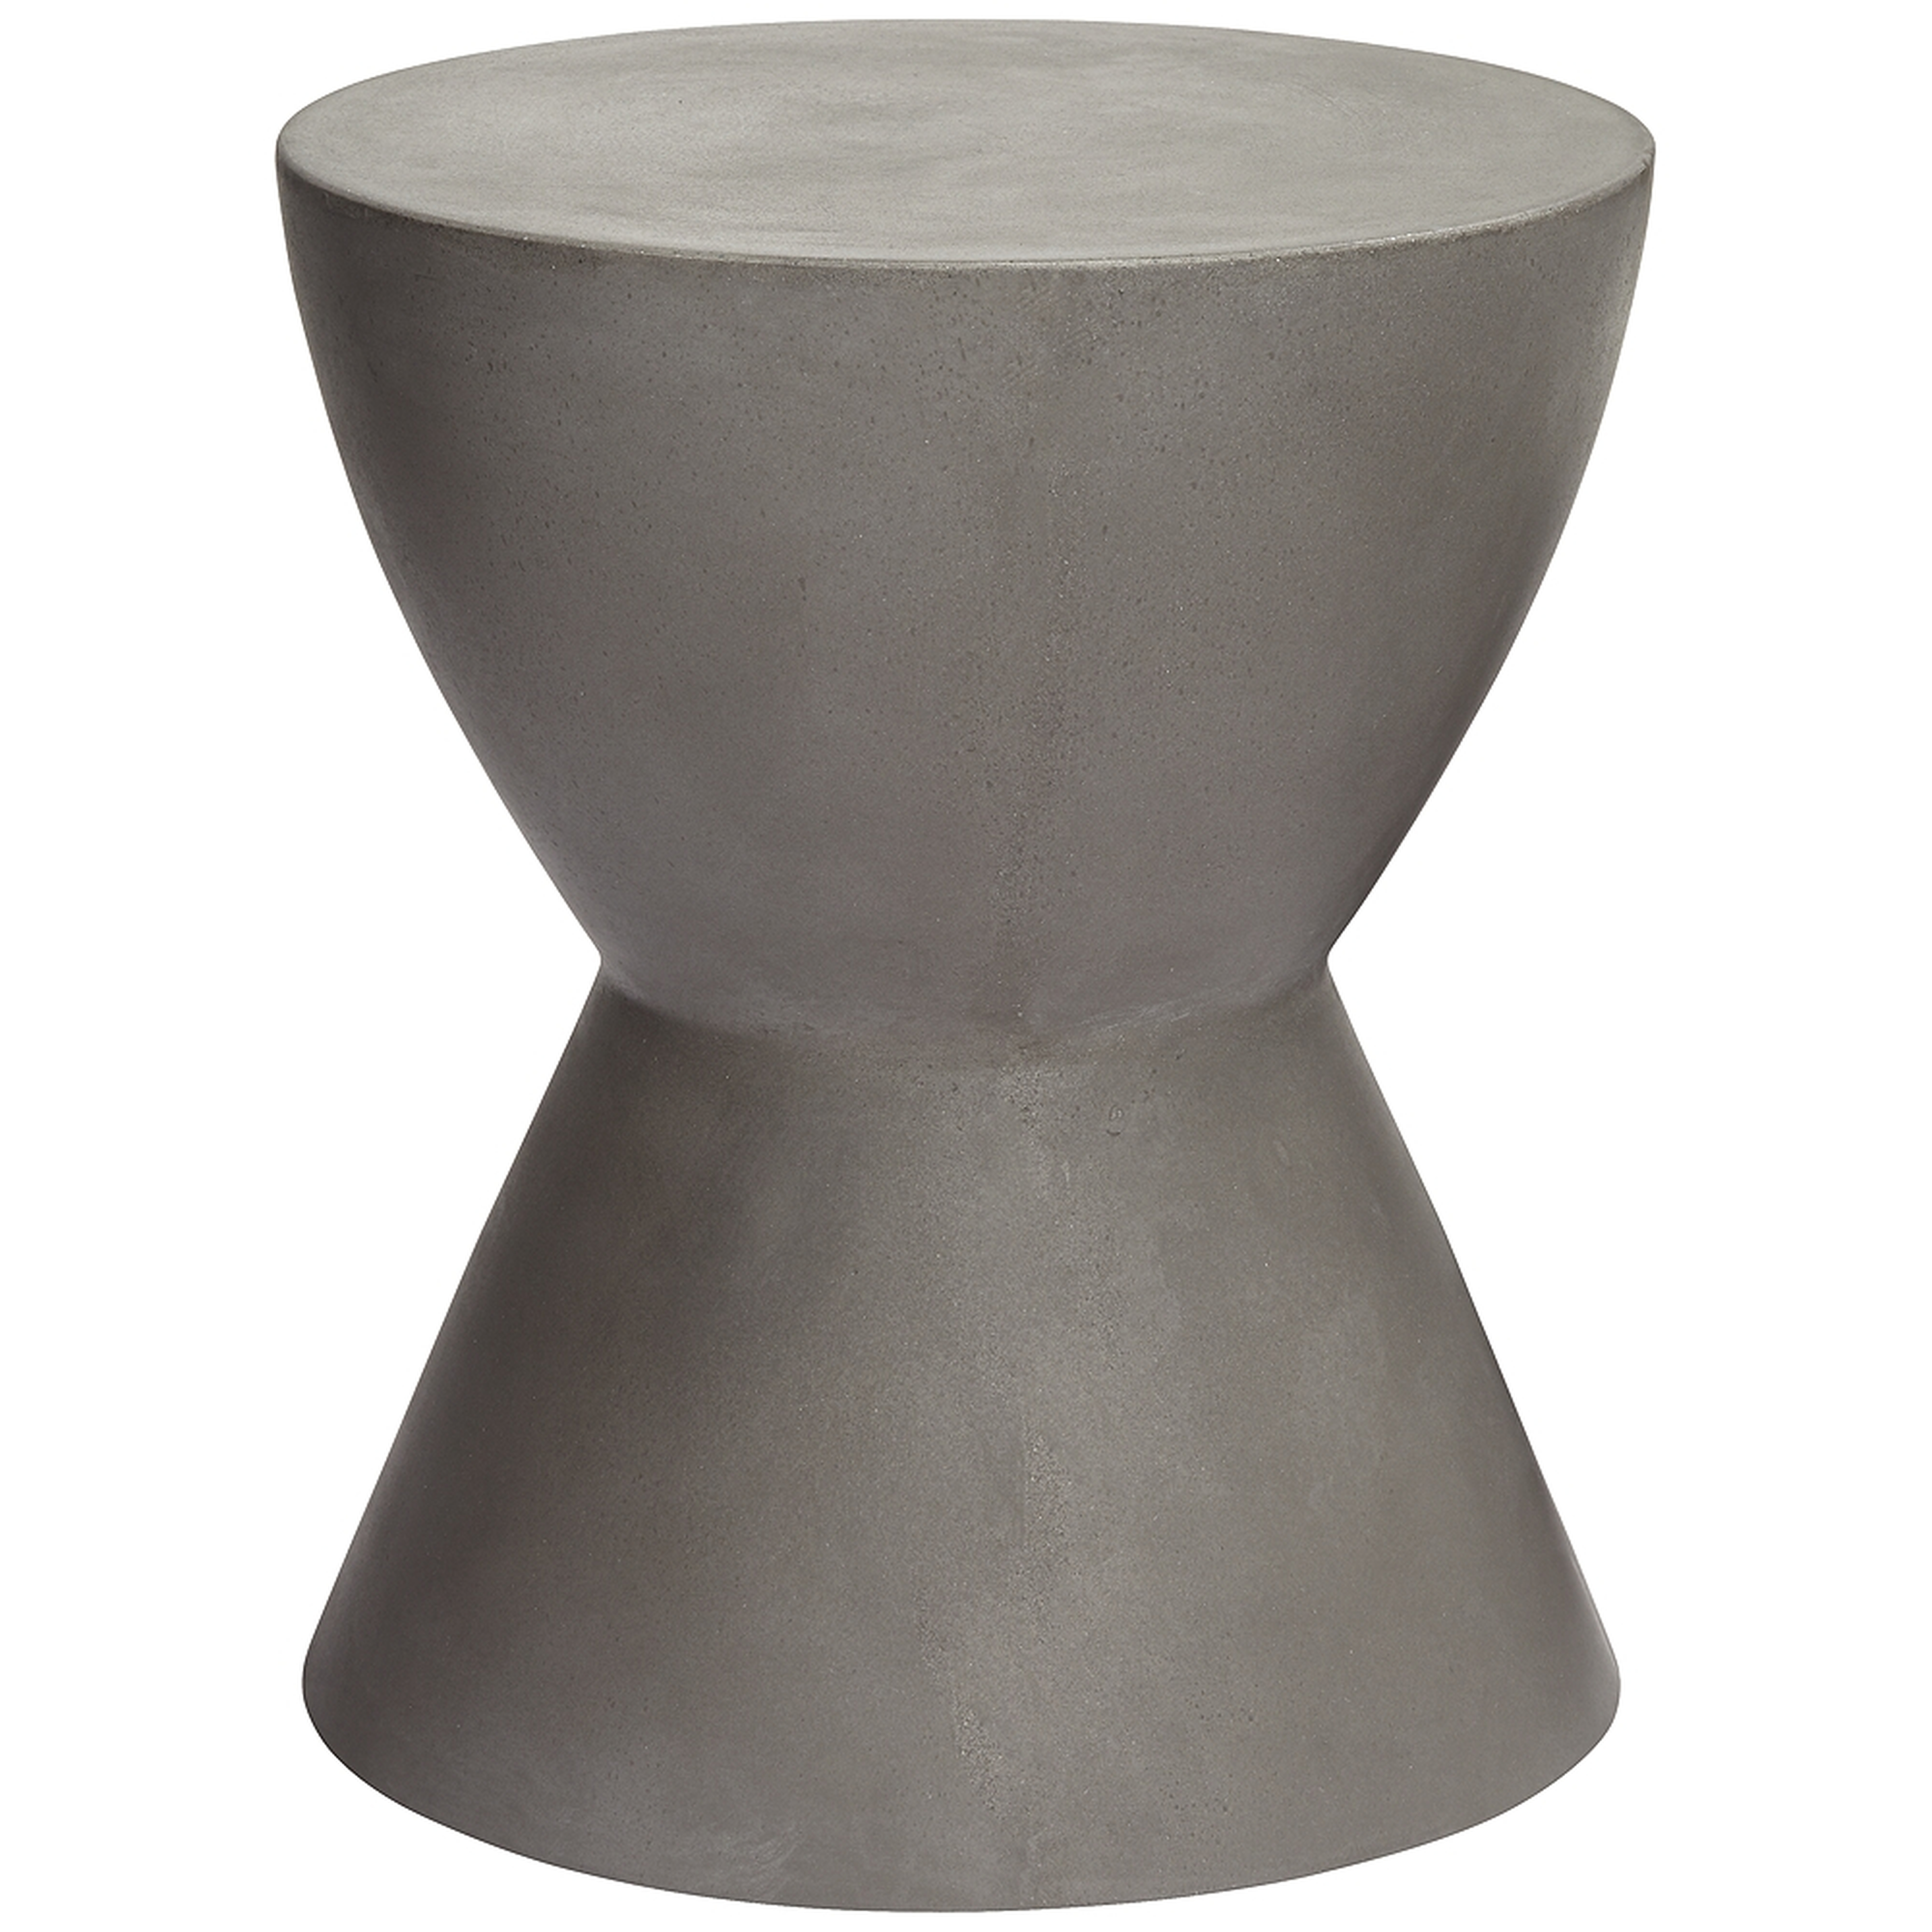 Logan Gray Concrete Outdoor End Table - Style # 34Y37 - Lamps Plus